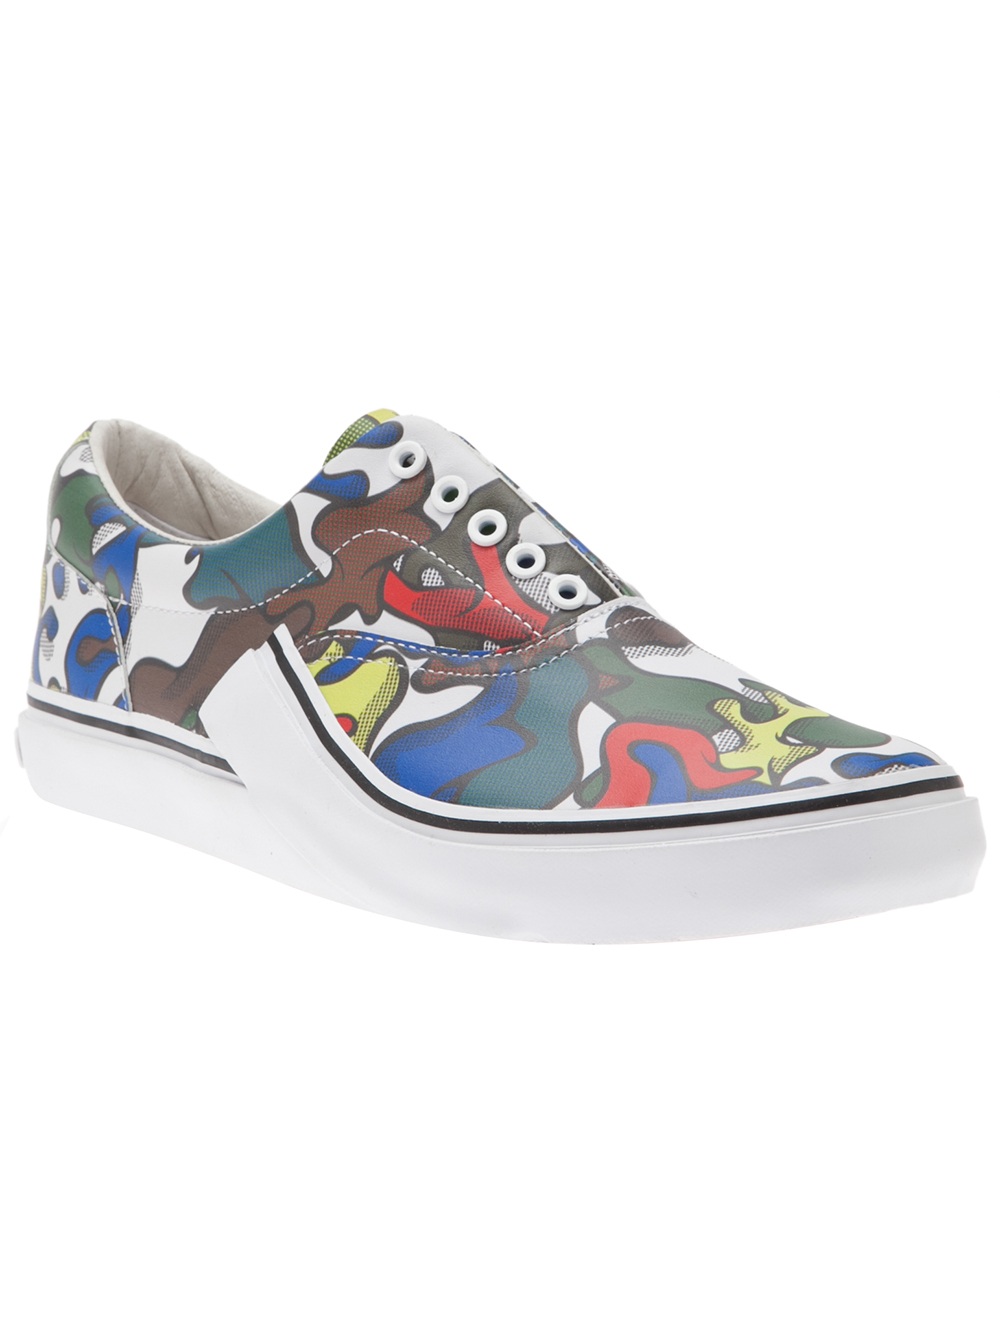 puma pop art shoes